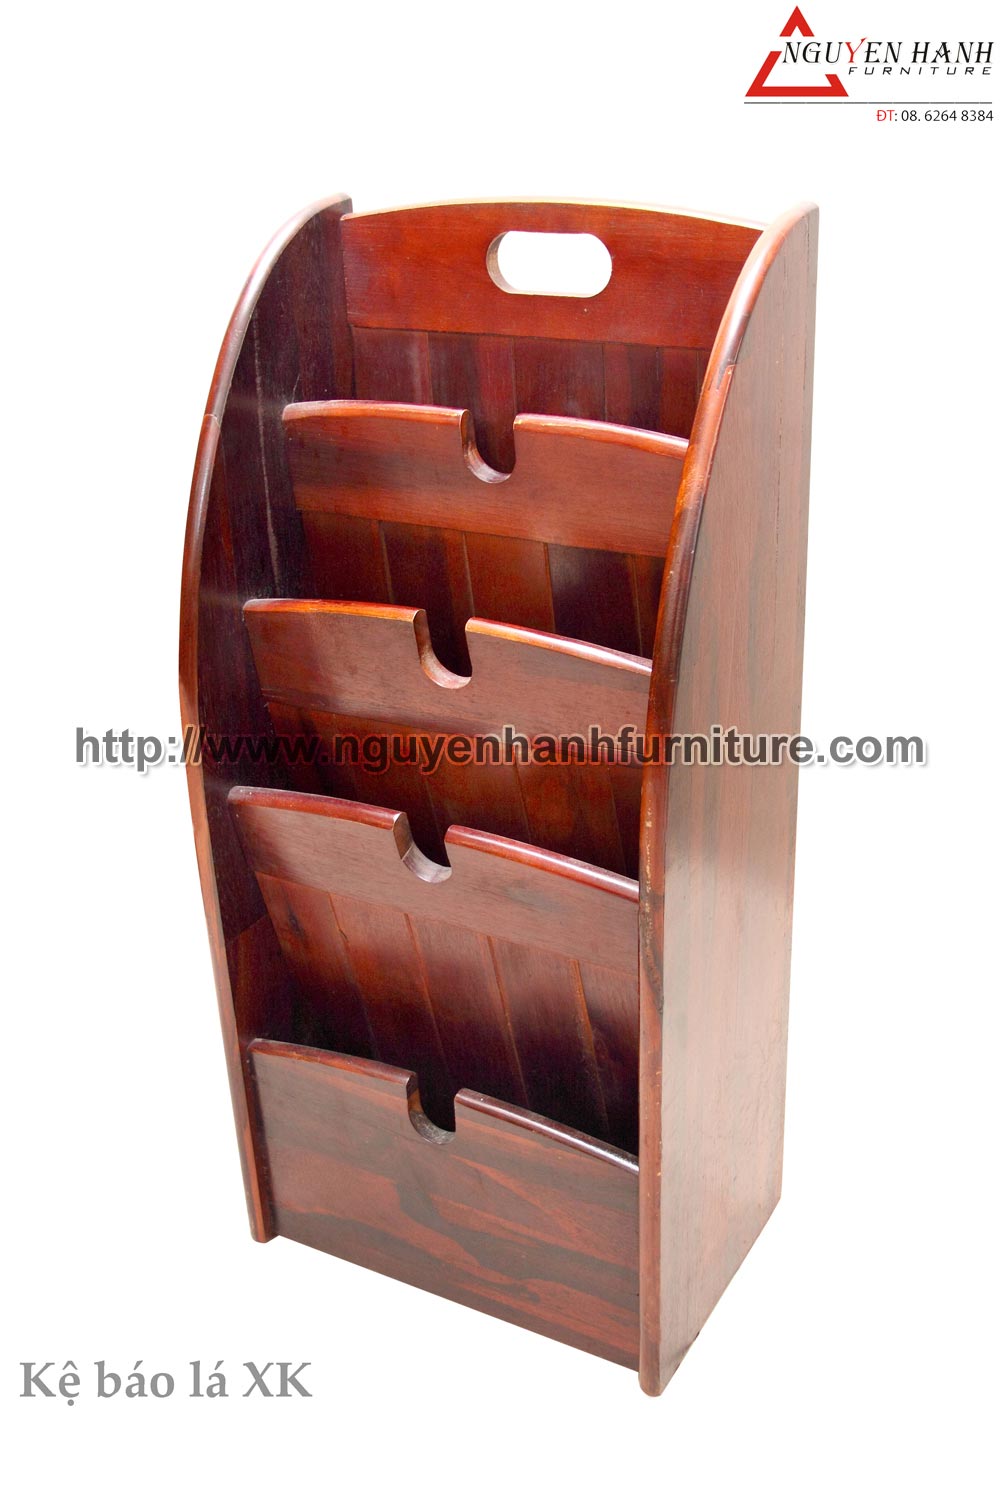 Name product: Export standard Newspaper Case - Dimensions:  - Description: Wood natural rubber